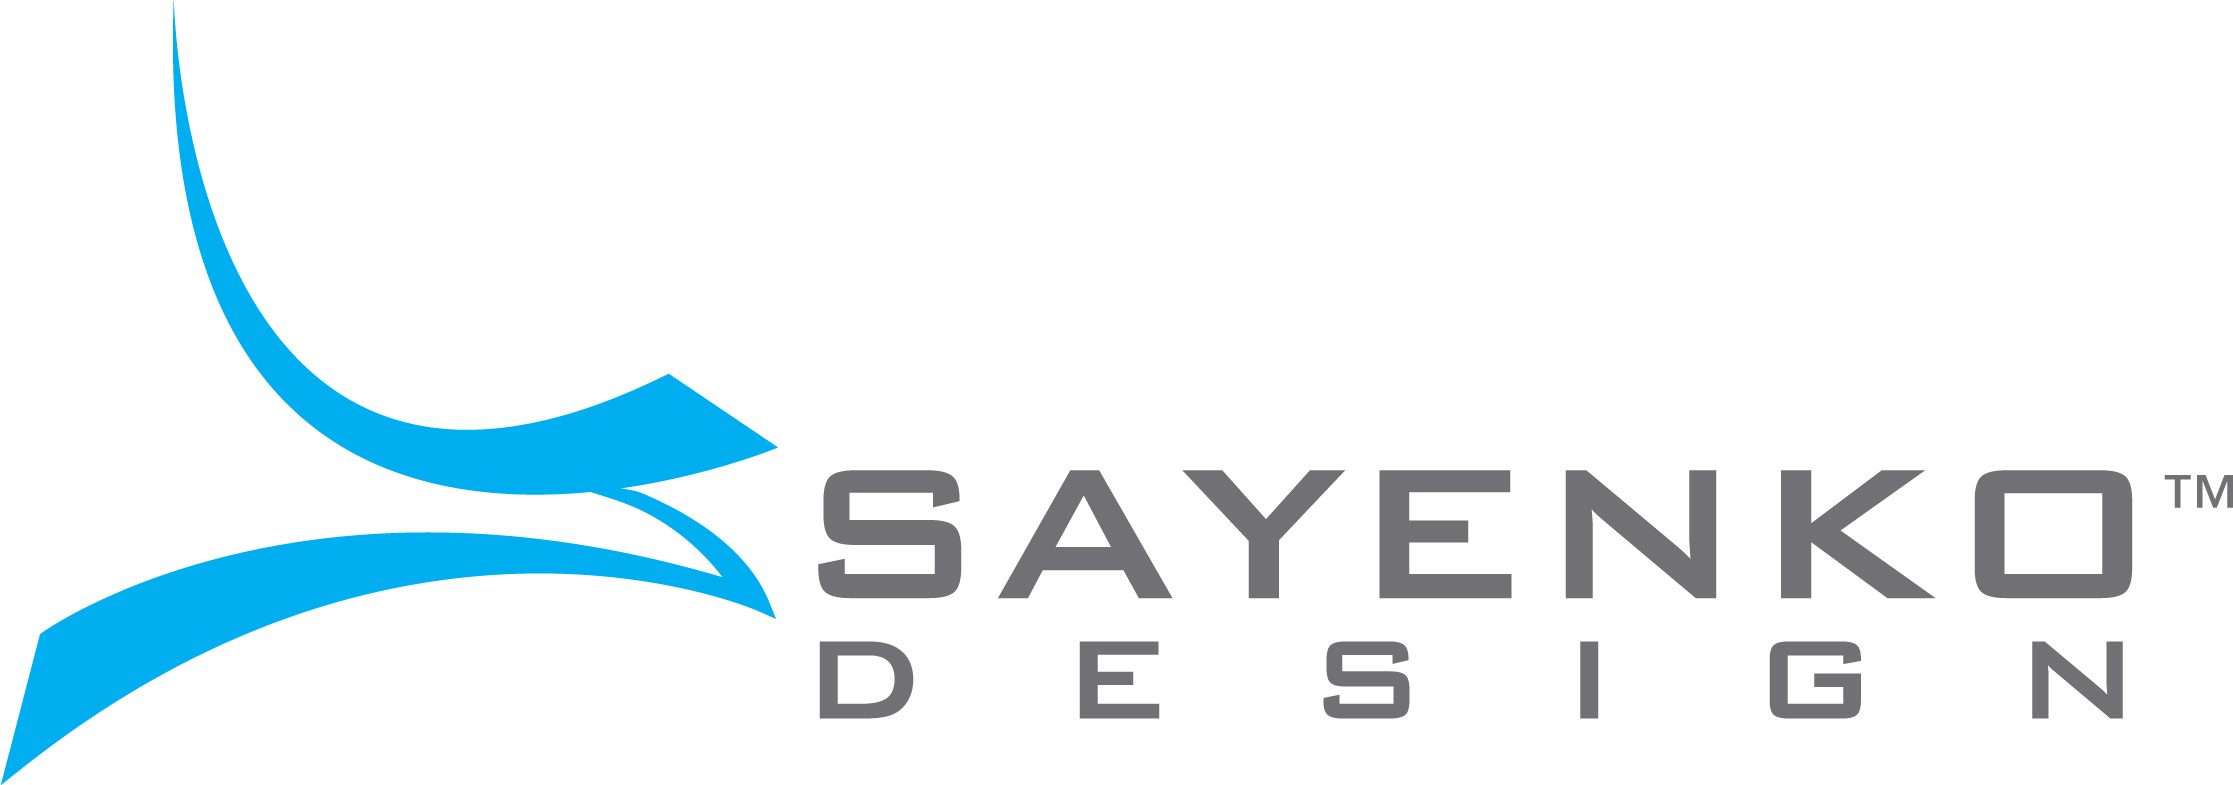 Top Seattle Web Development Firm Logo: Sayenko Design